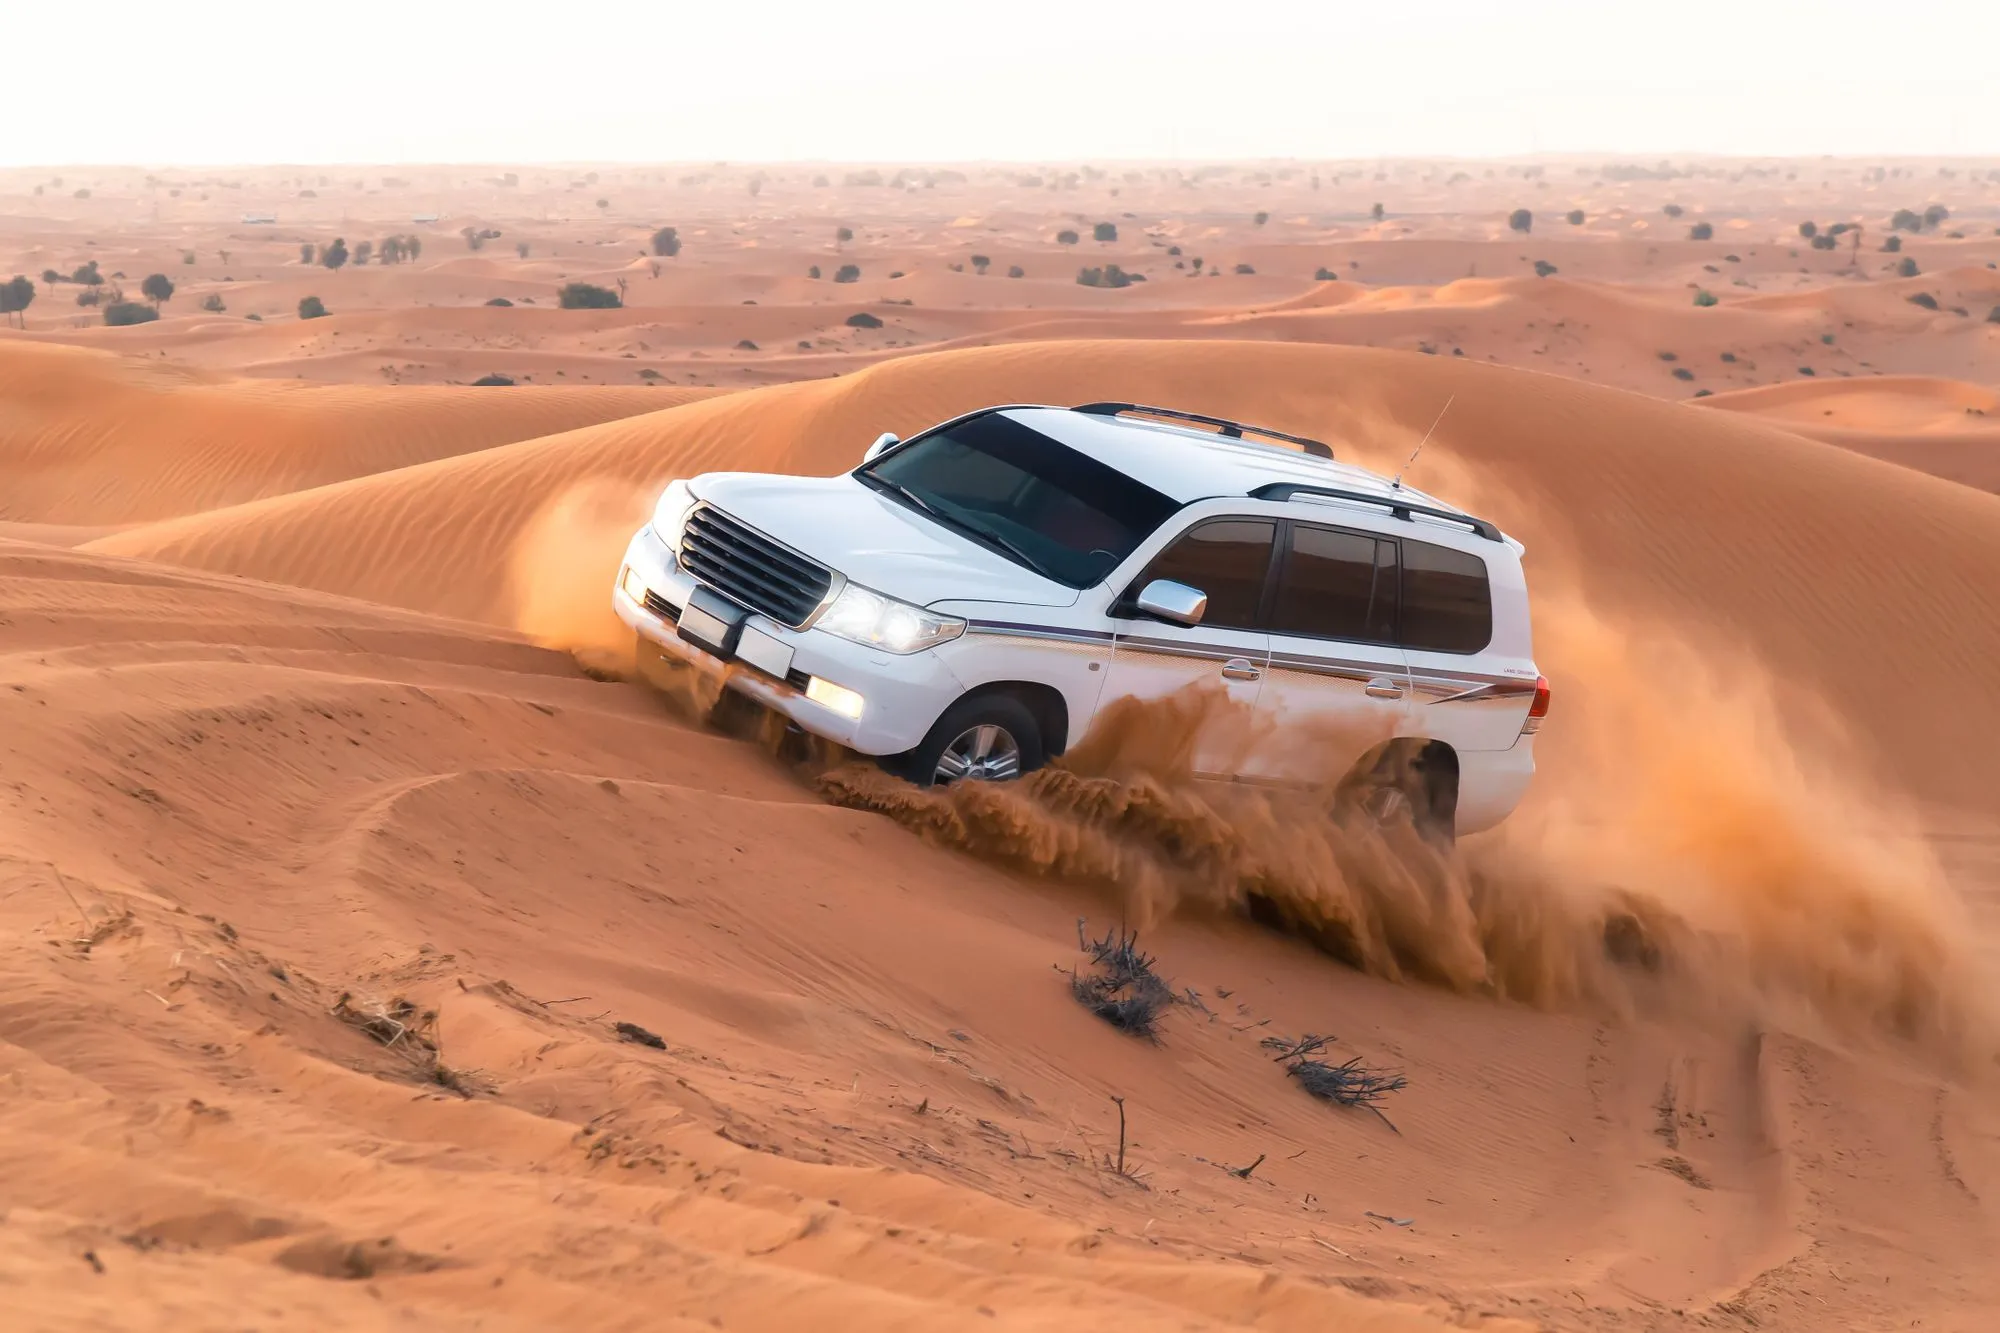 Dune Bashing in doha